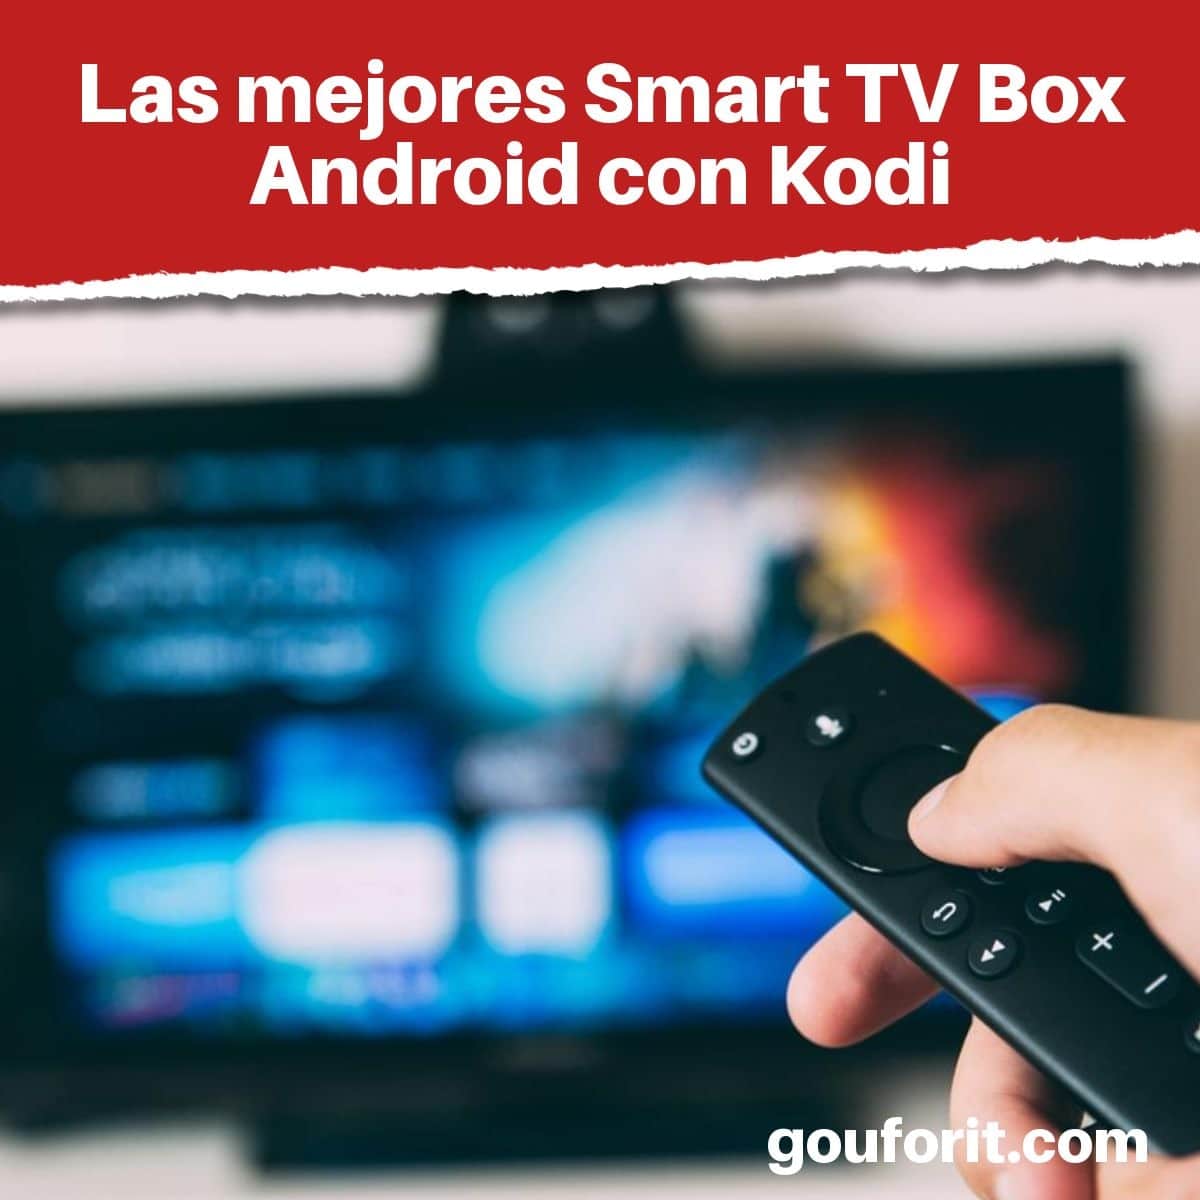 Las mejores Smart TV Box Android con Kodi